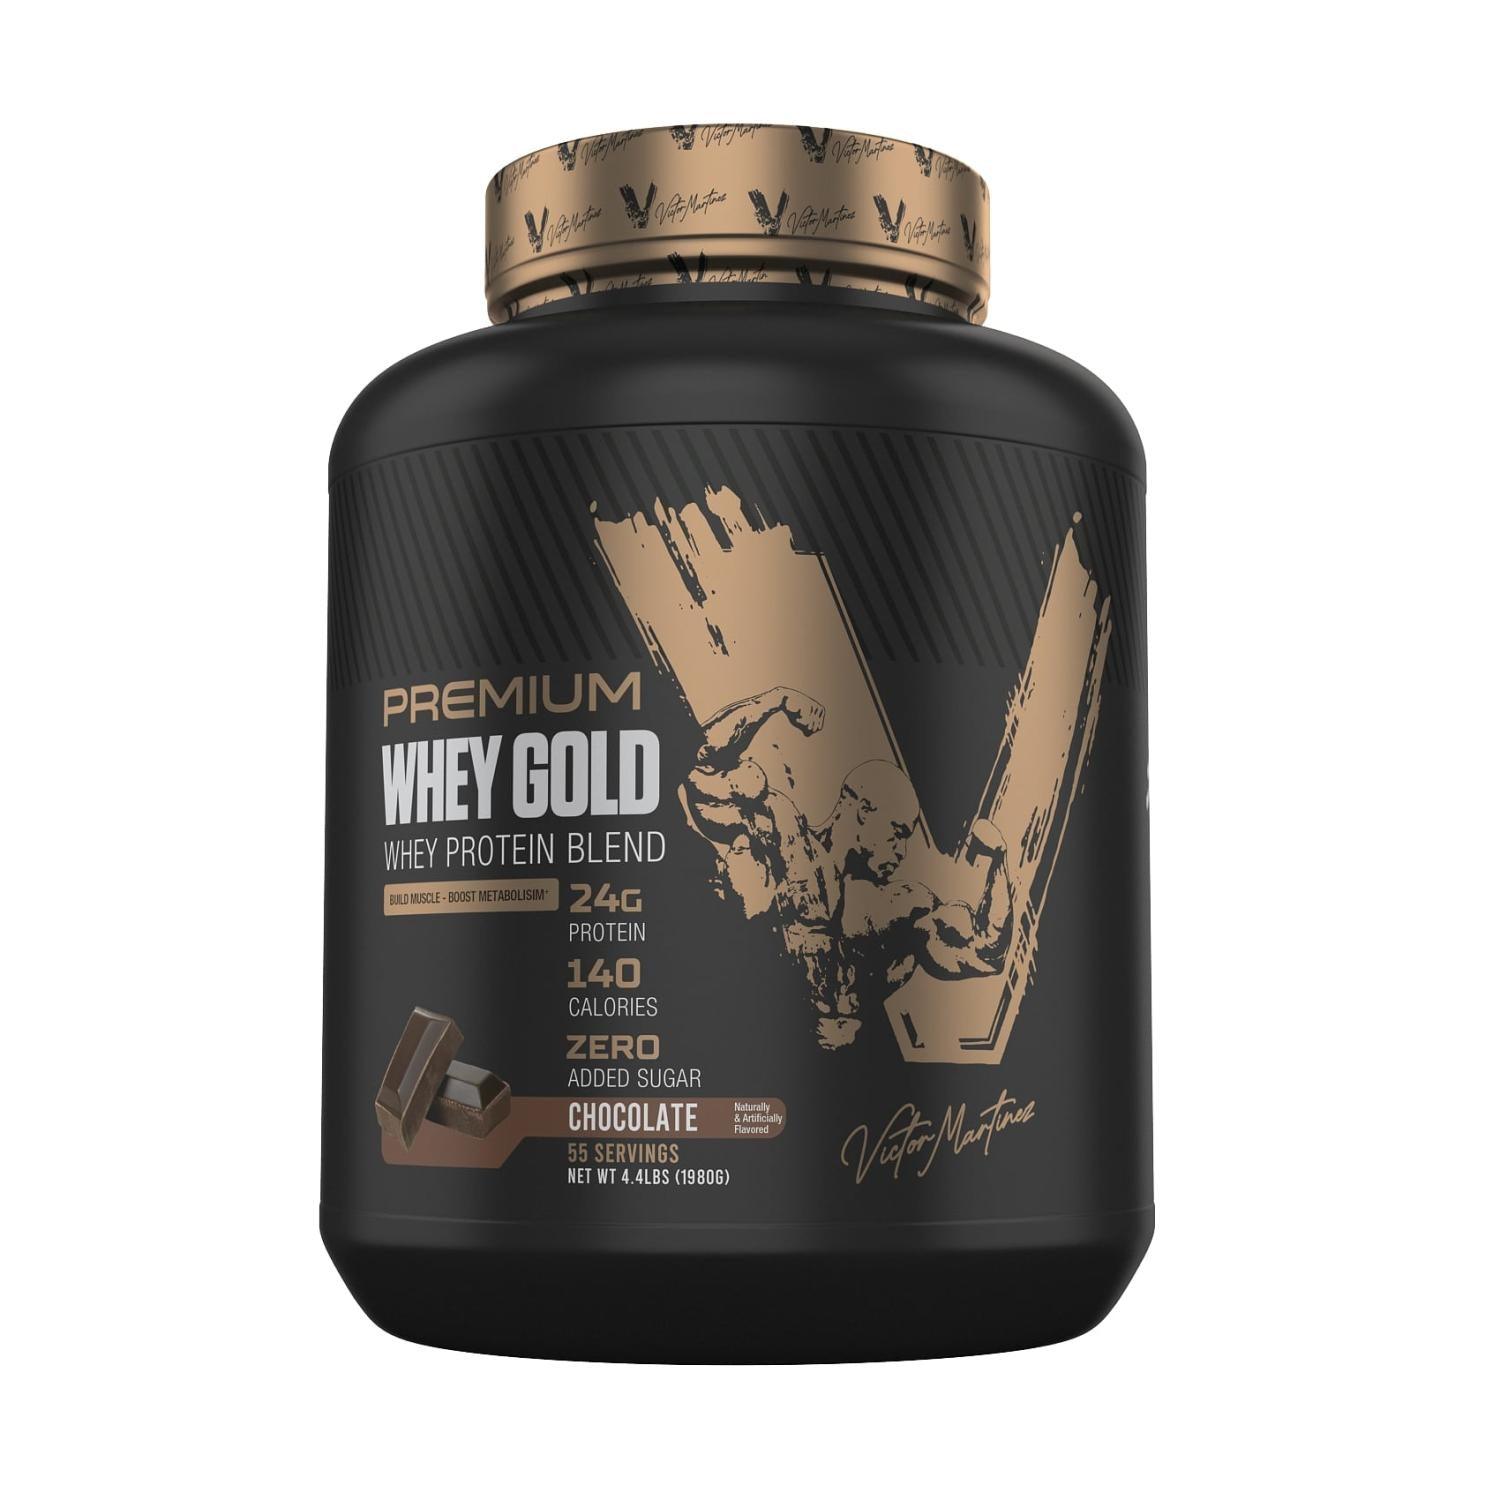 Victor Martinez Premium Whey Gold Protein 4LBS - Wellness Shoppee